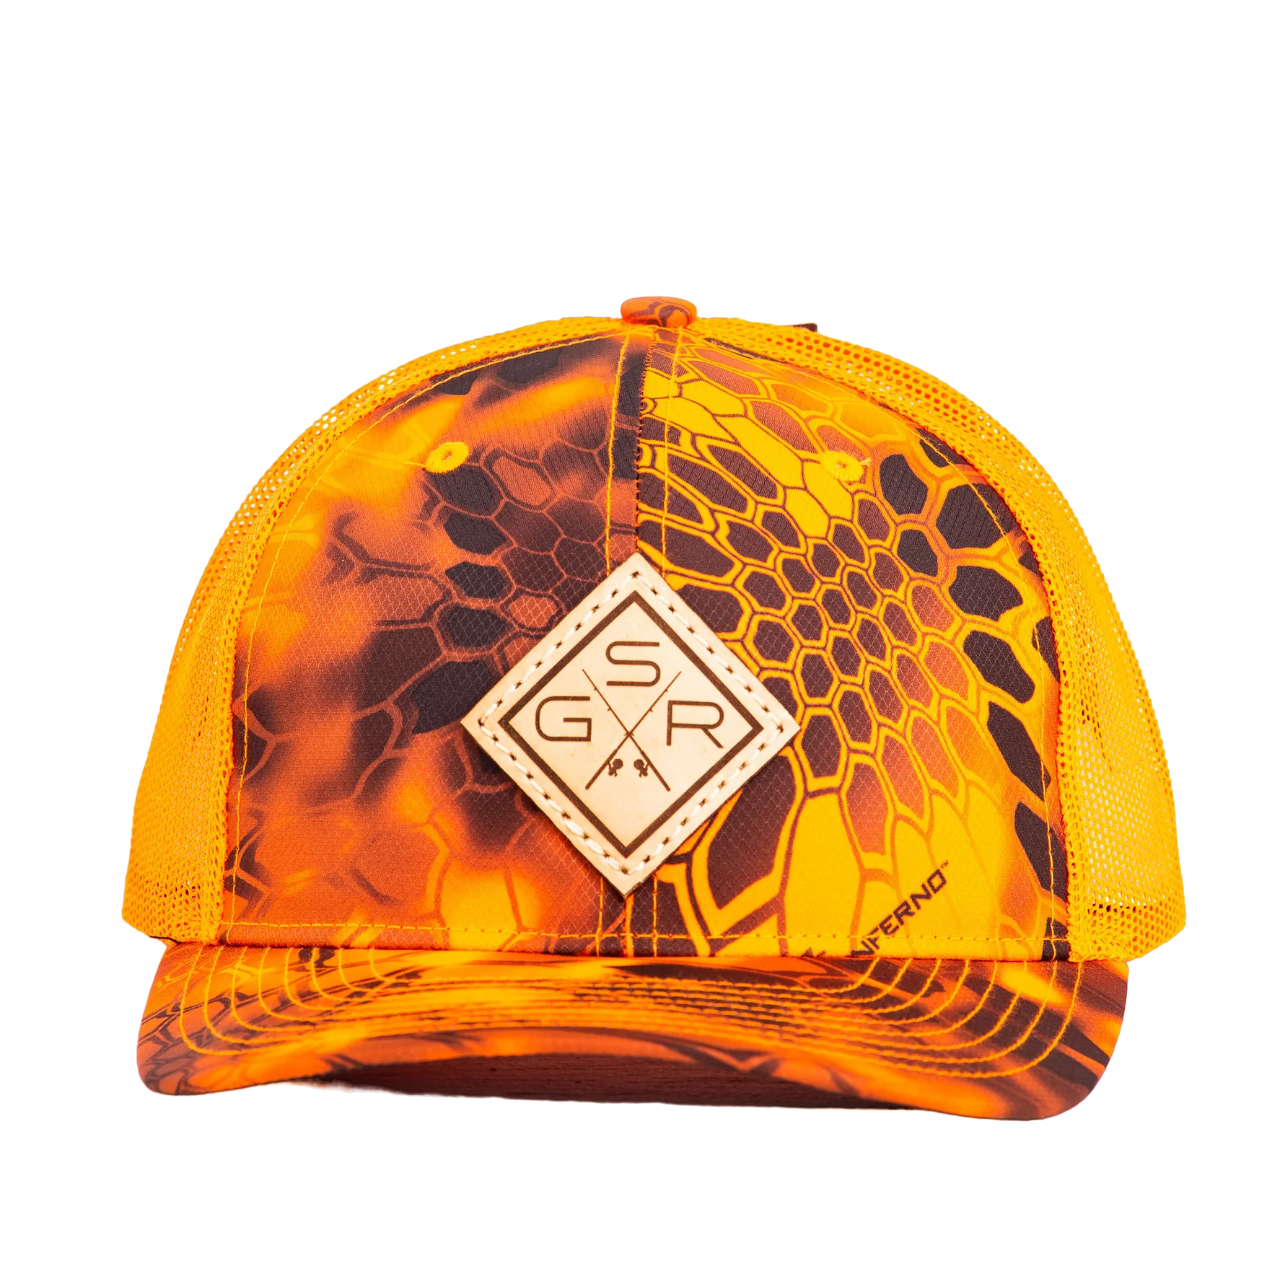 Kryptek Blaze Camo GSR Hat